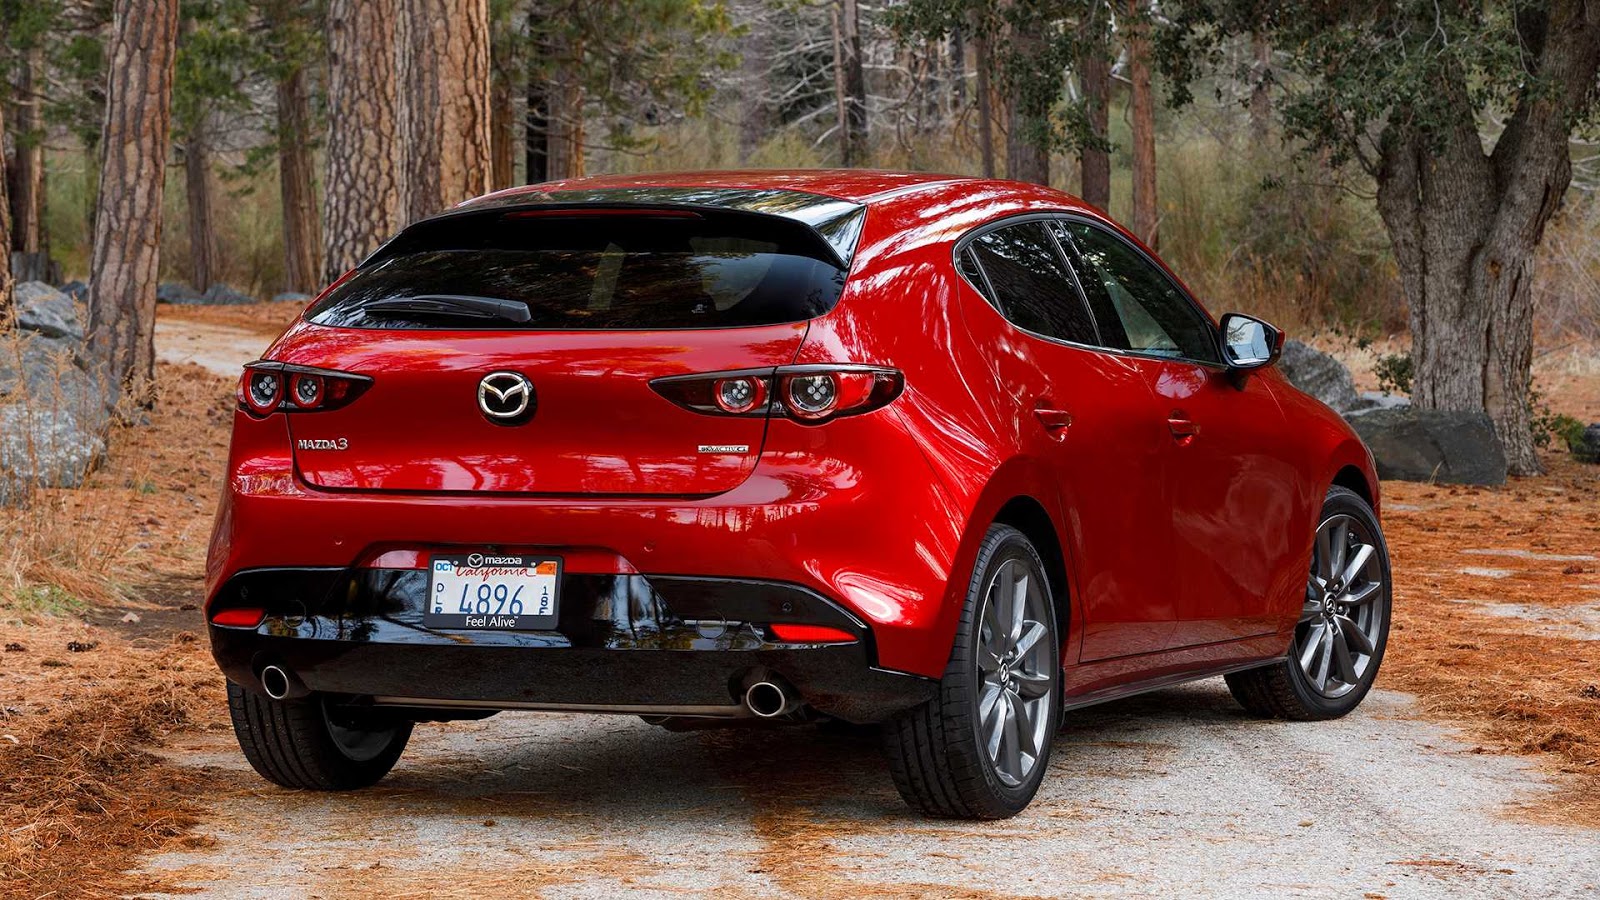 2019 Mazda 3 Hatchback Review, Specs, price - Carshighlight.com